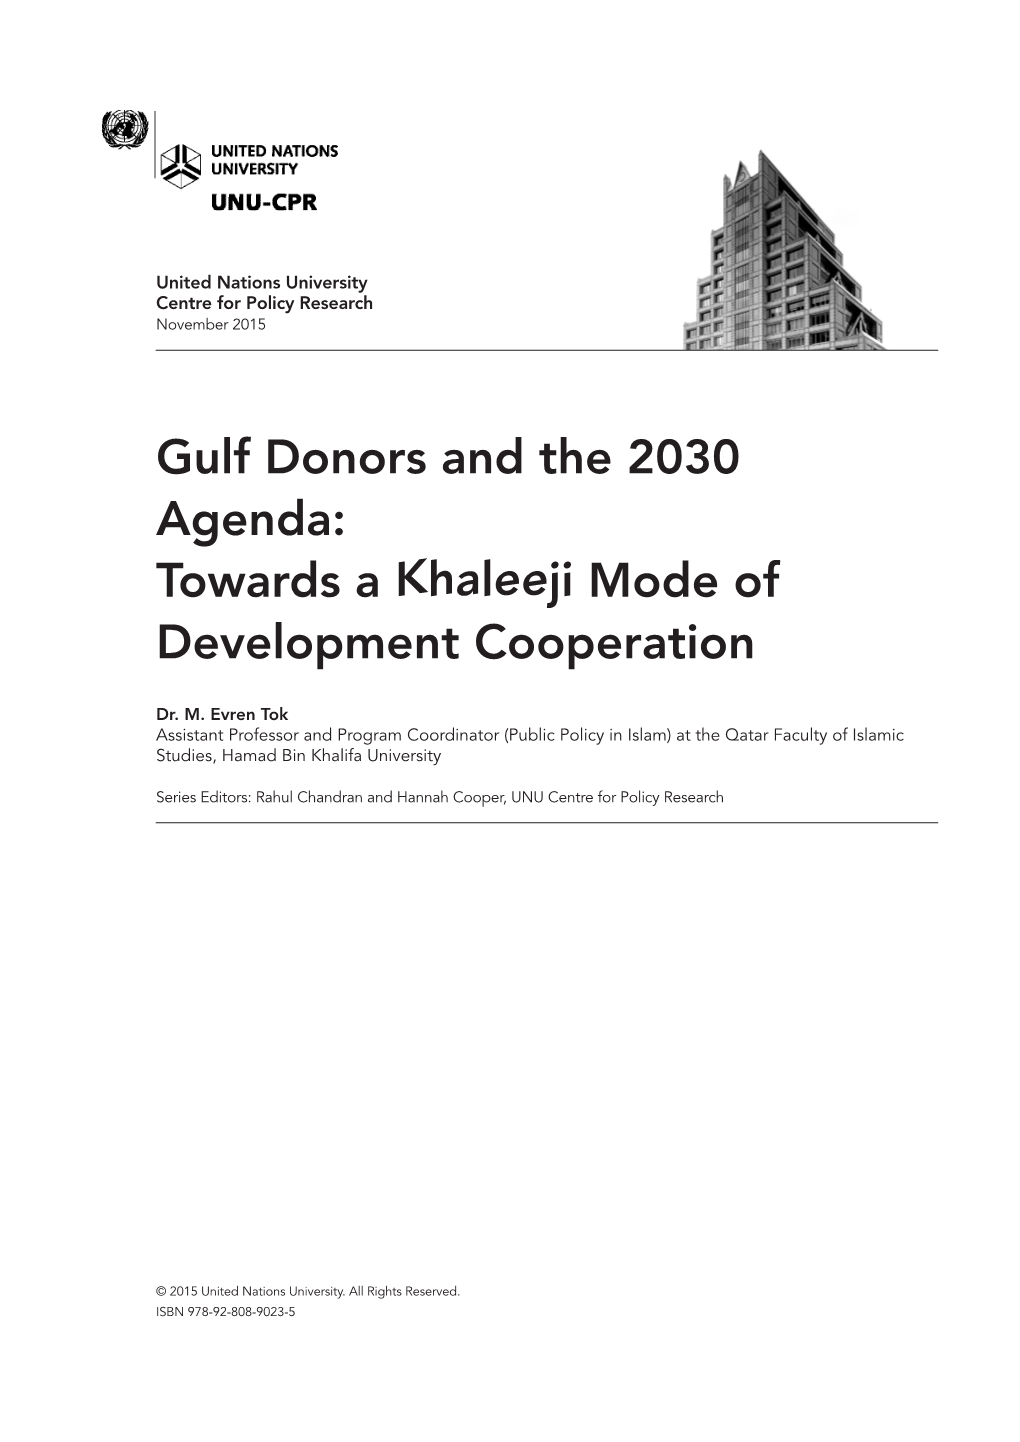 Gulf Donors and the 2030 Agenda: Towards a Khaleeji Mode of Development Cooperation